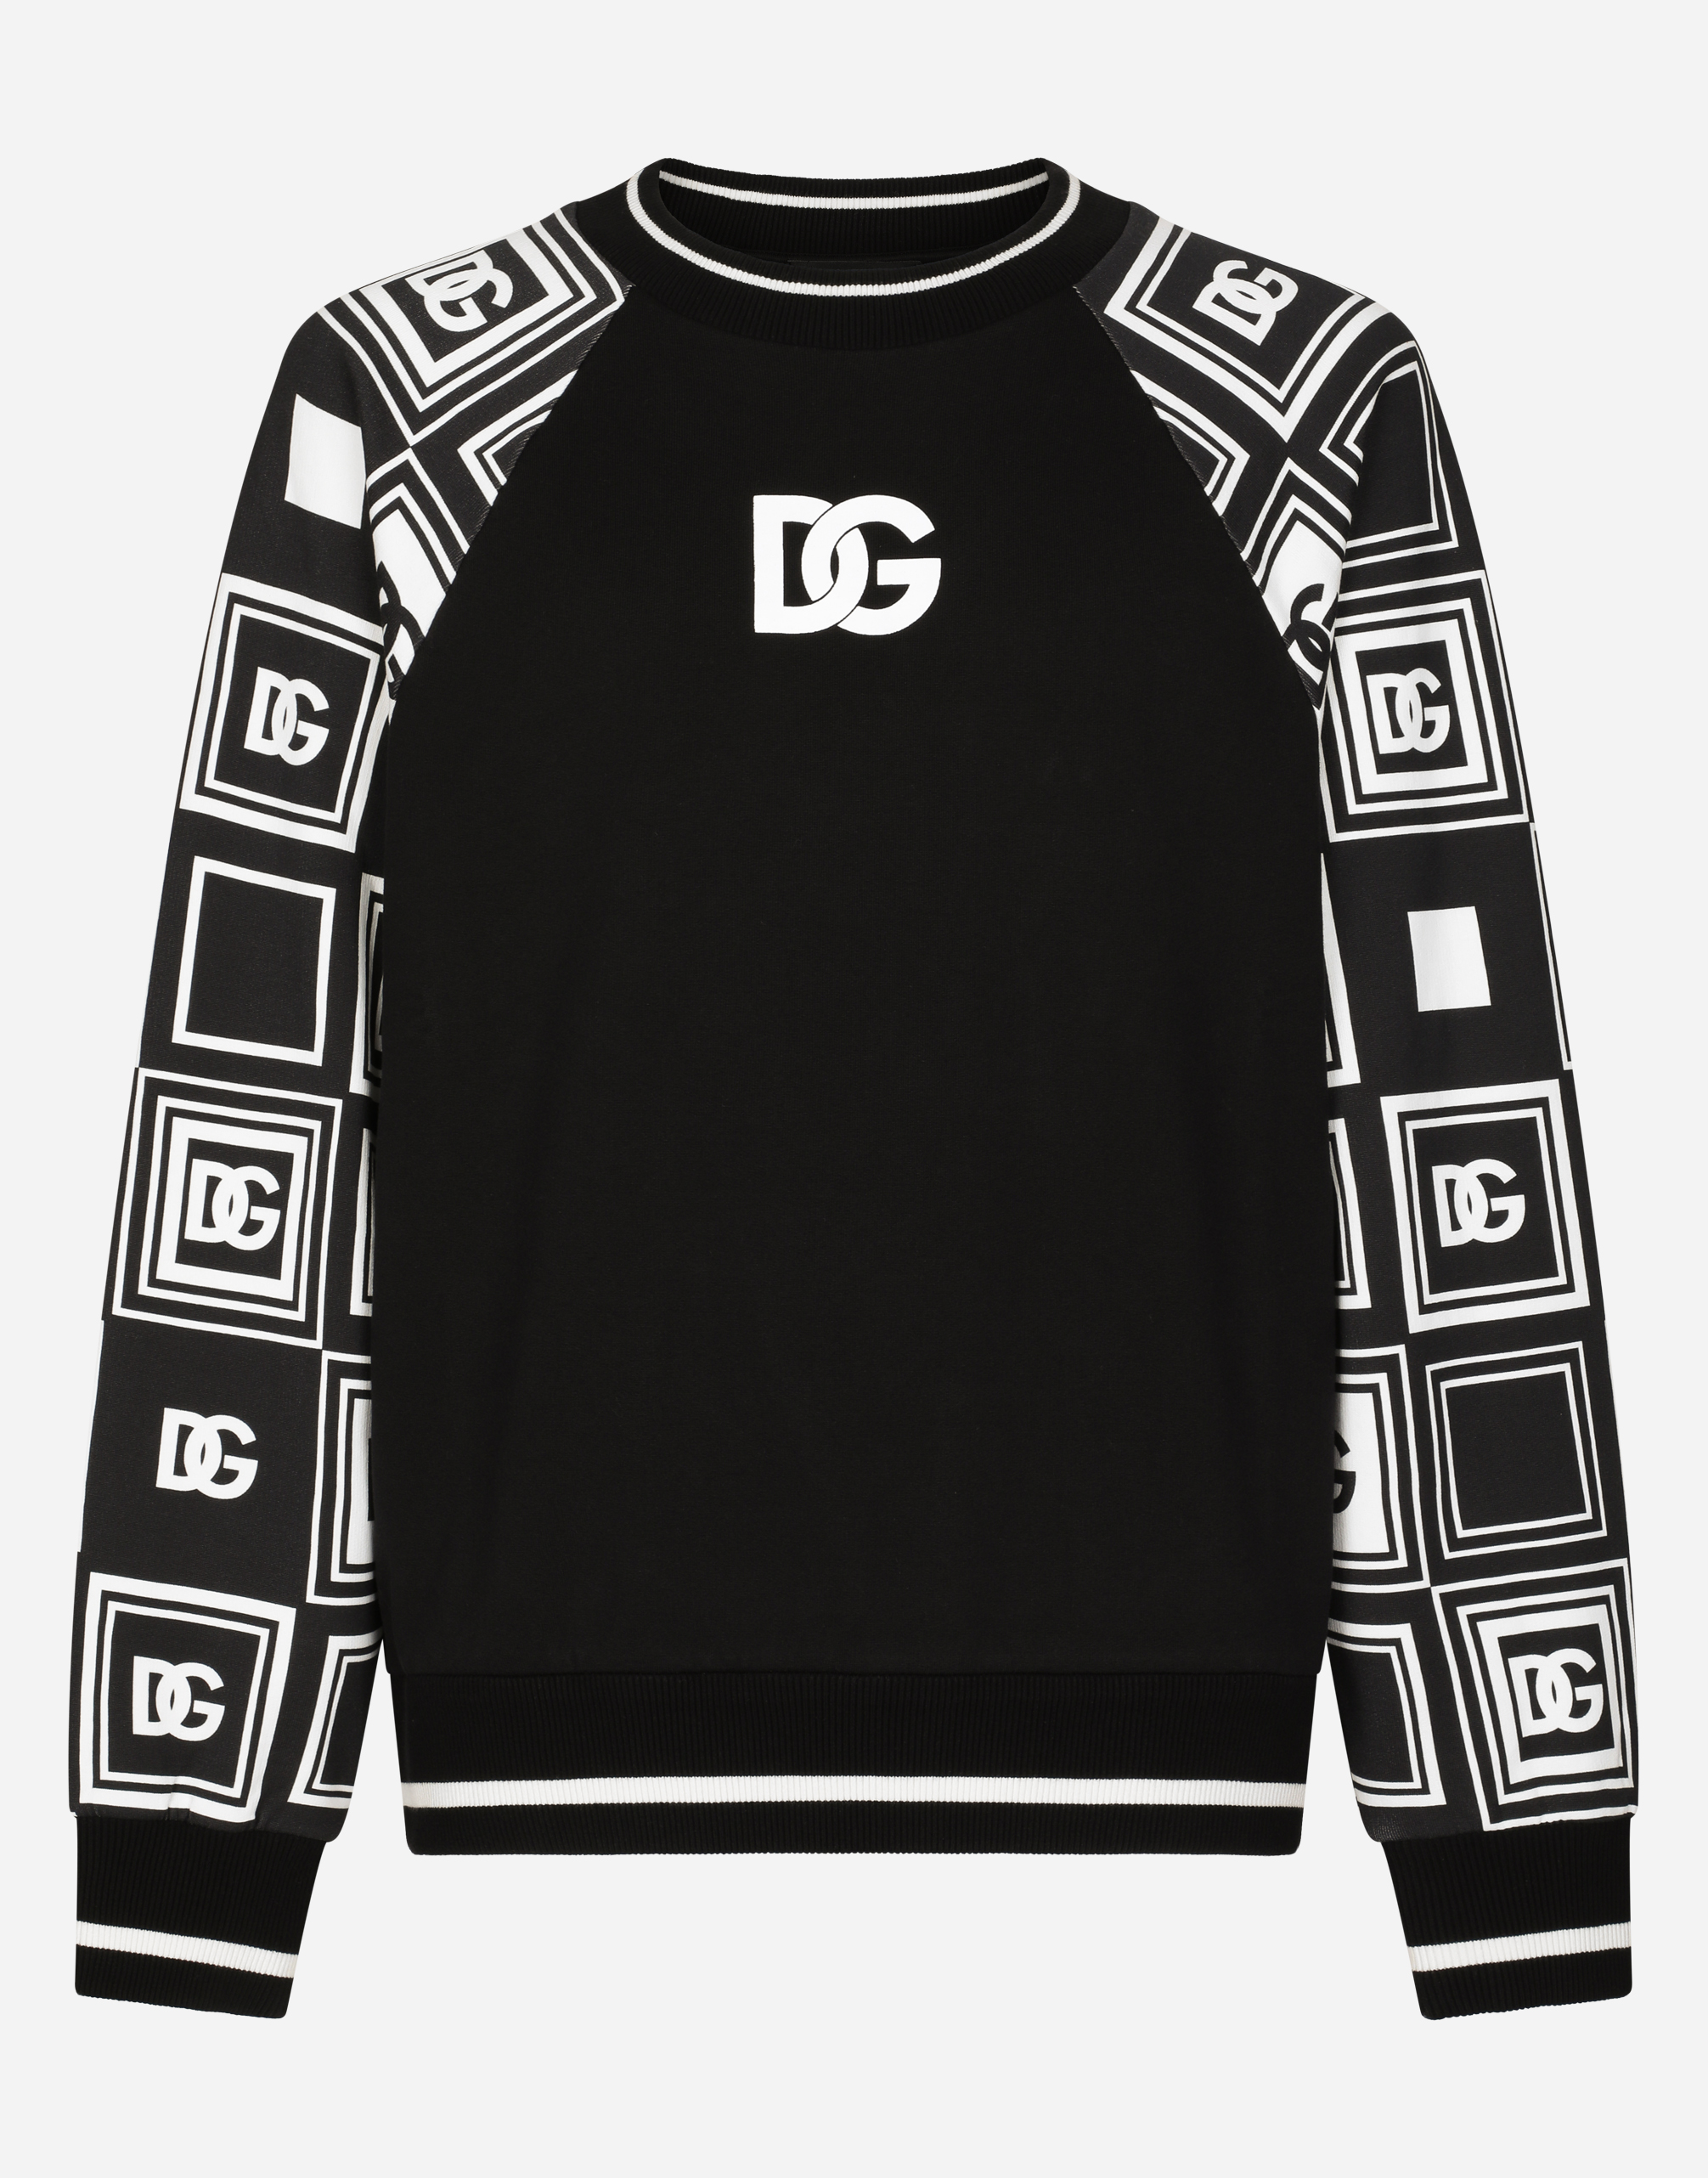 Jersey sweatshirt with DG logo print in Multicolor